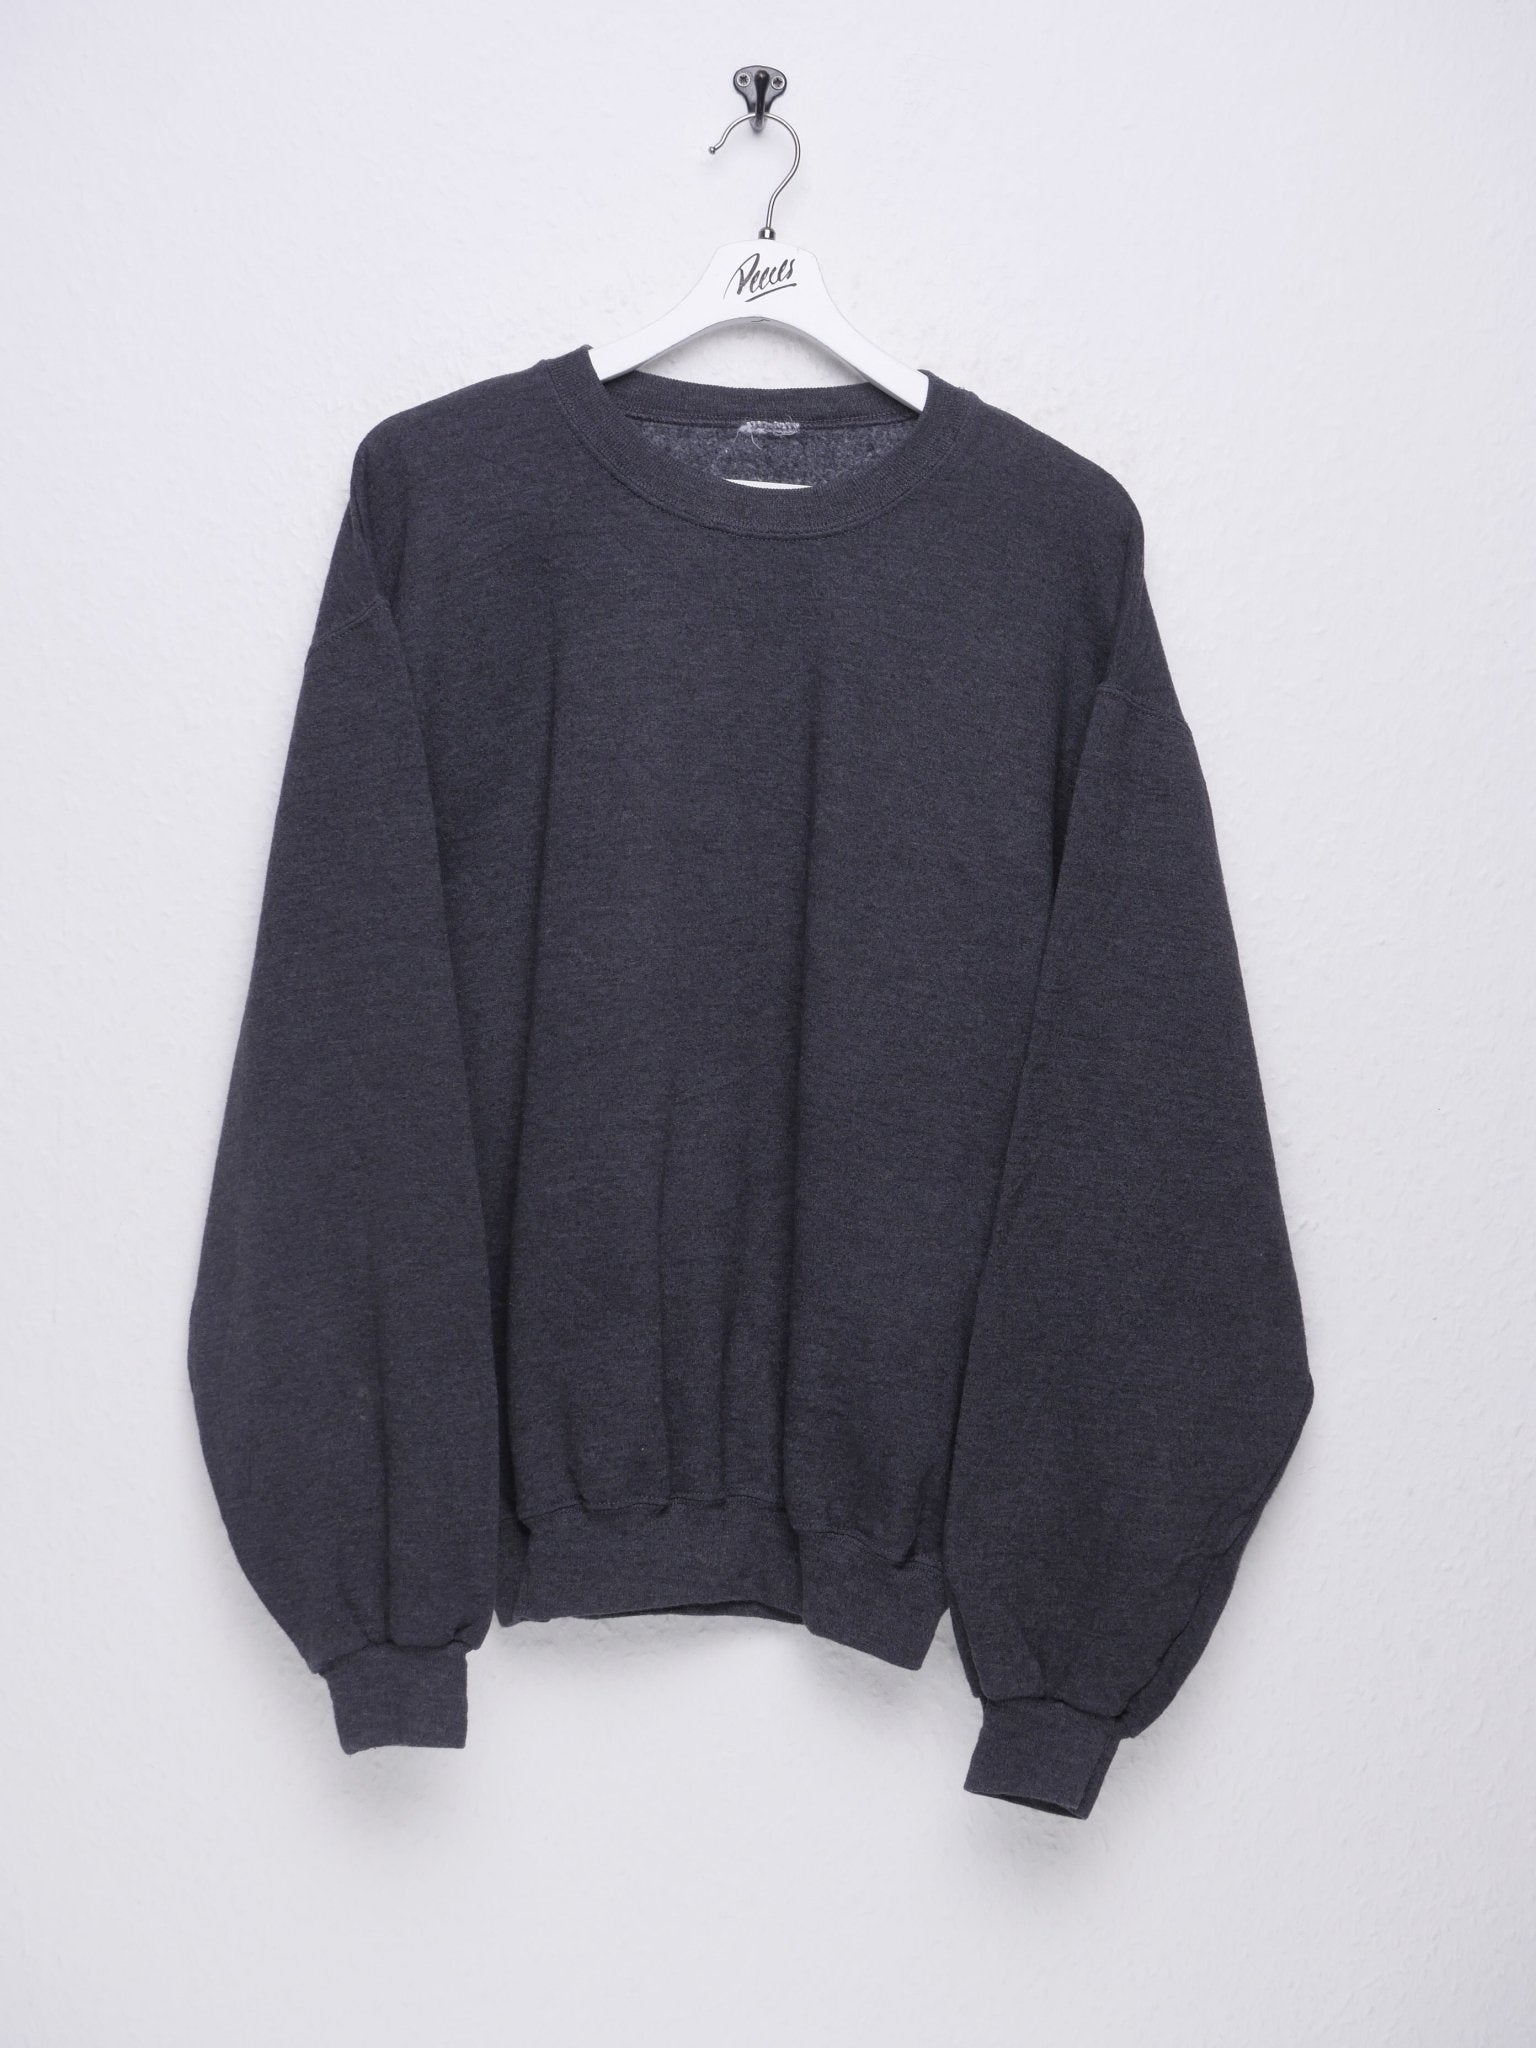 Basic grey Vintage Sweater - Peeces